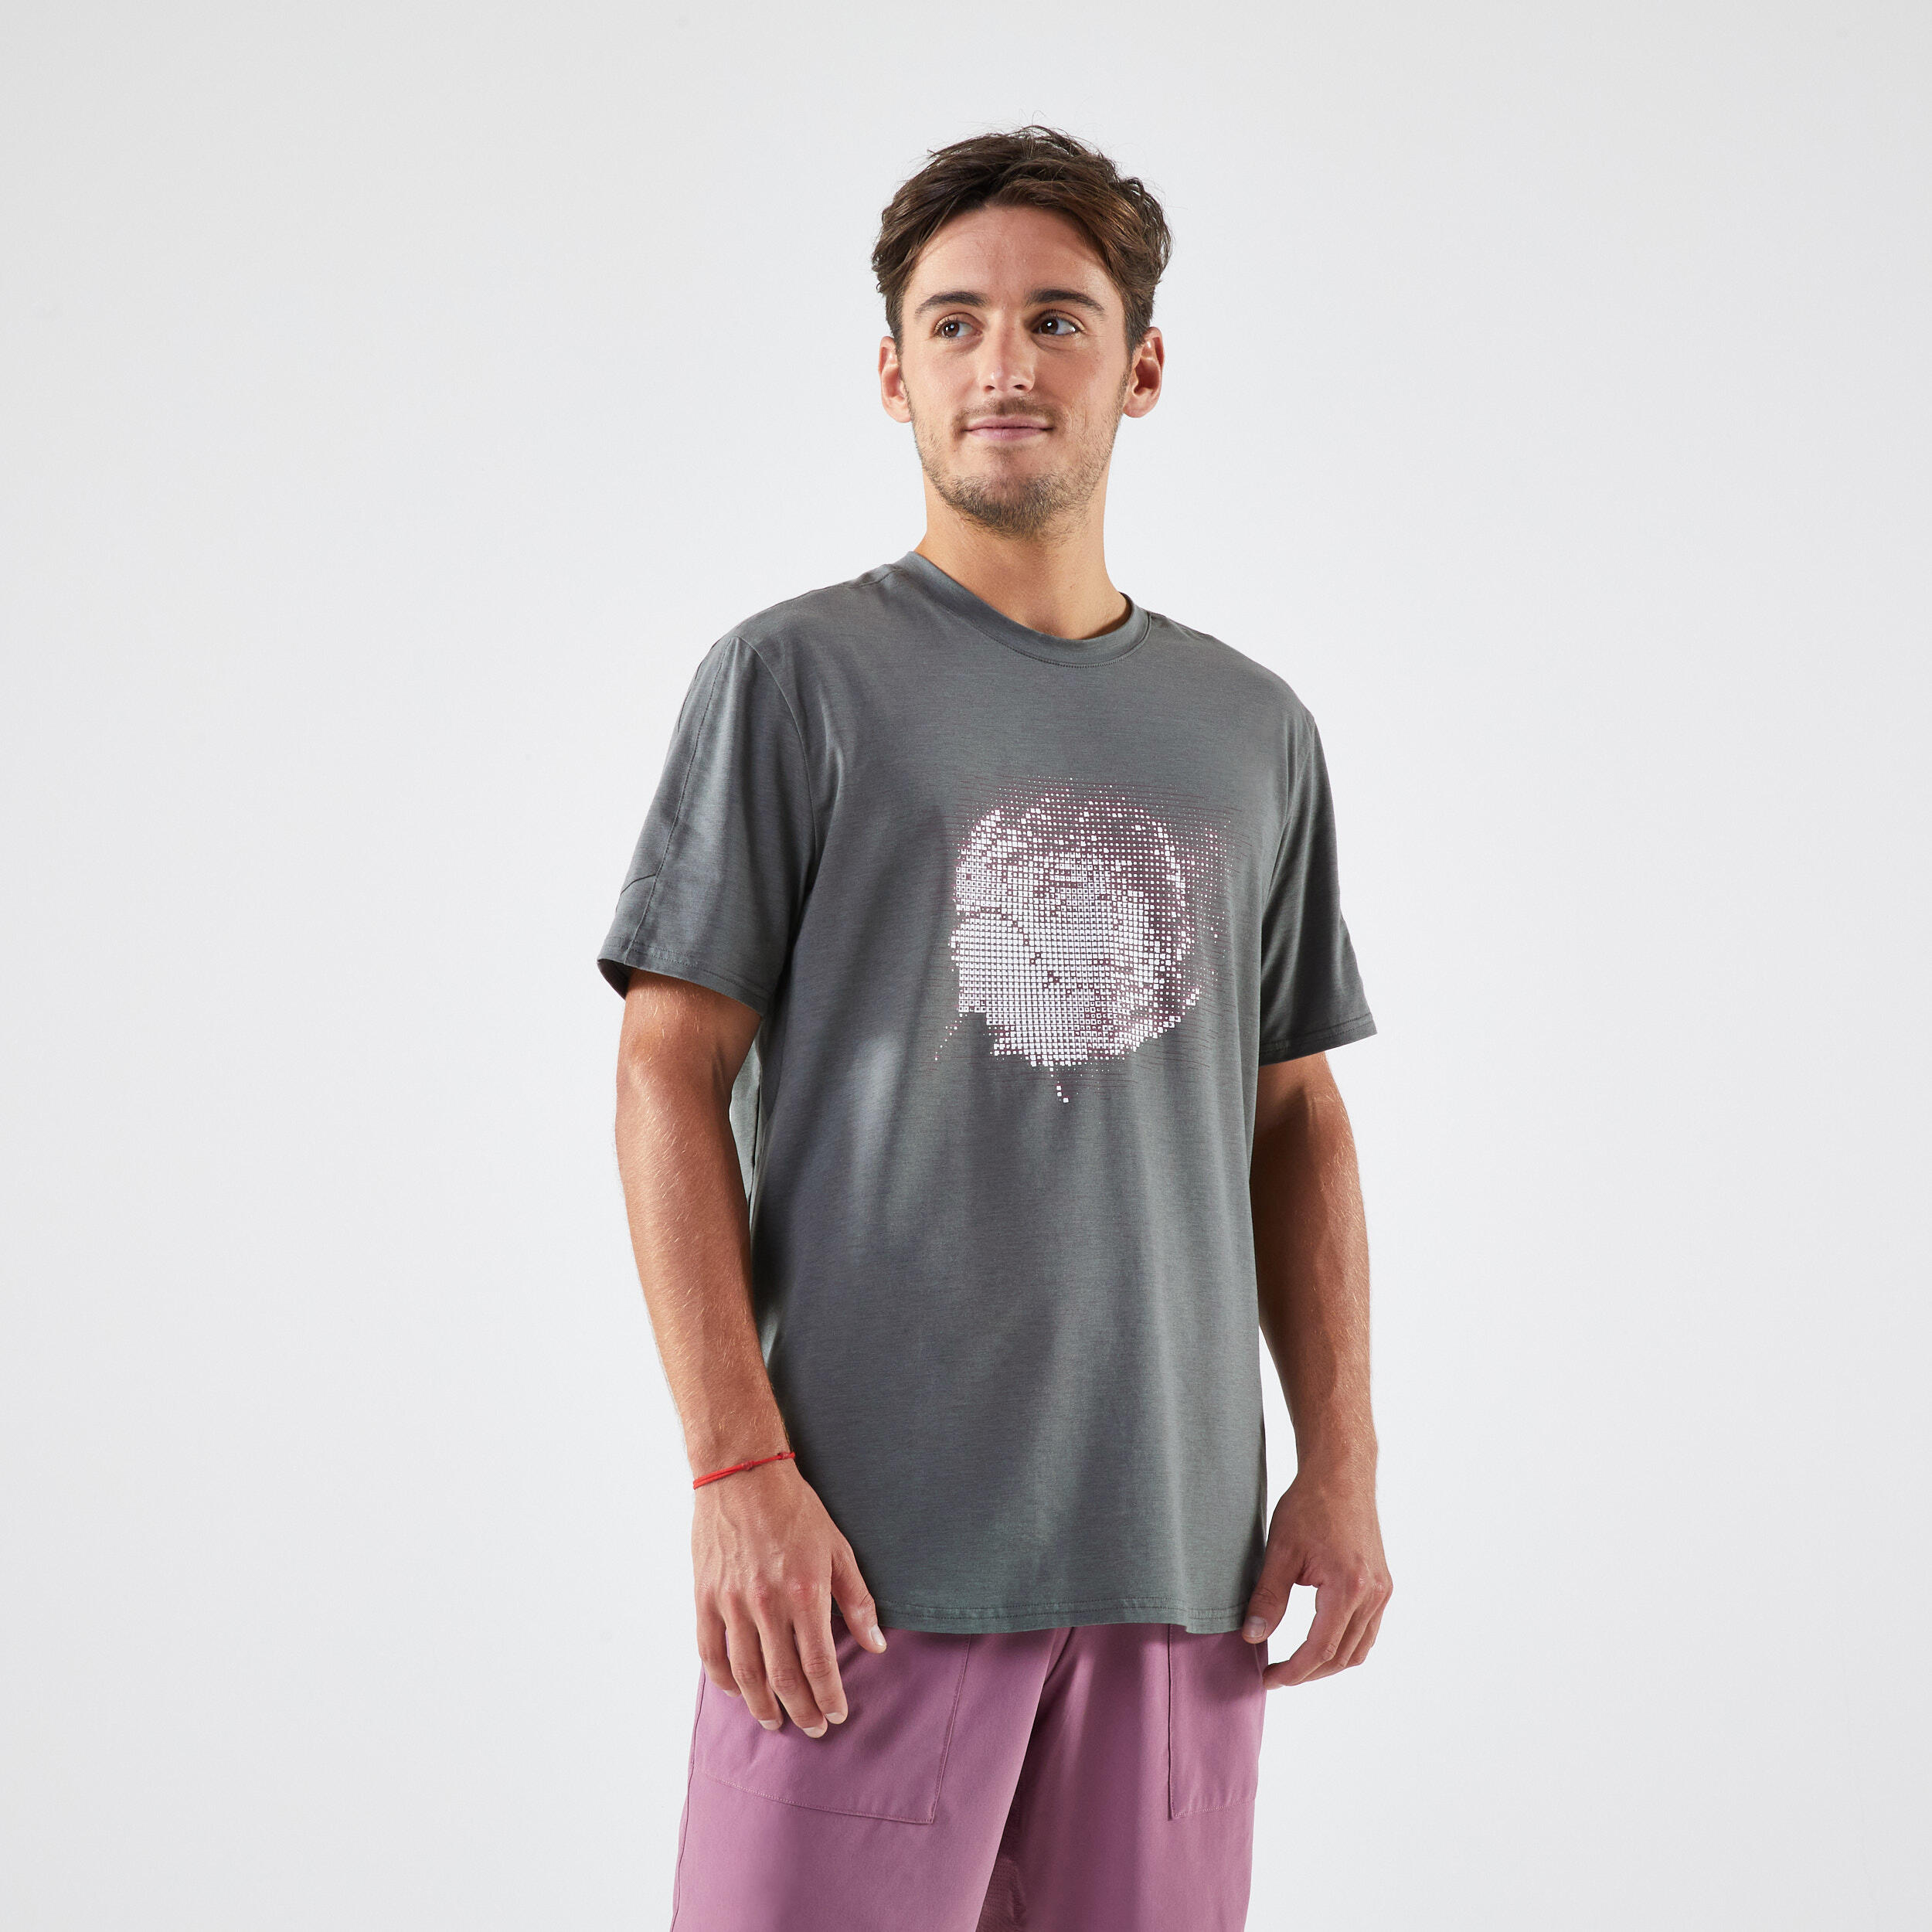 Decathlon | T-shirt tennis uomo SOFT verde militare |  Artengo